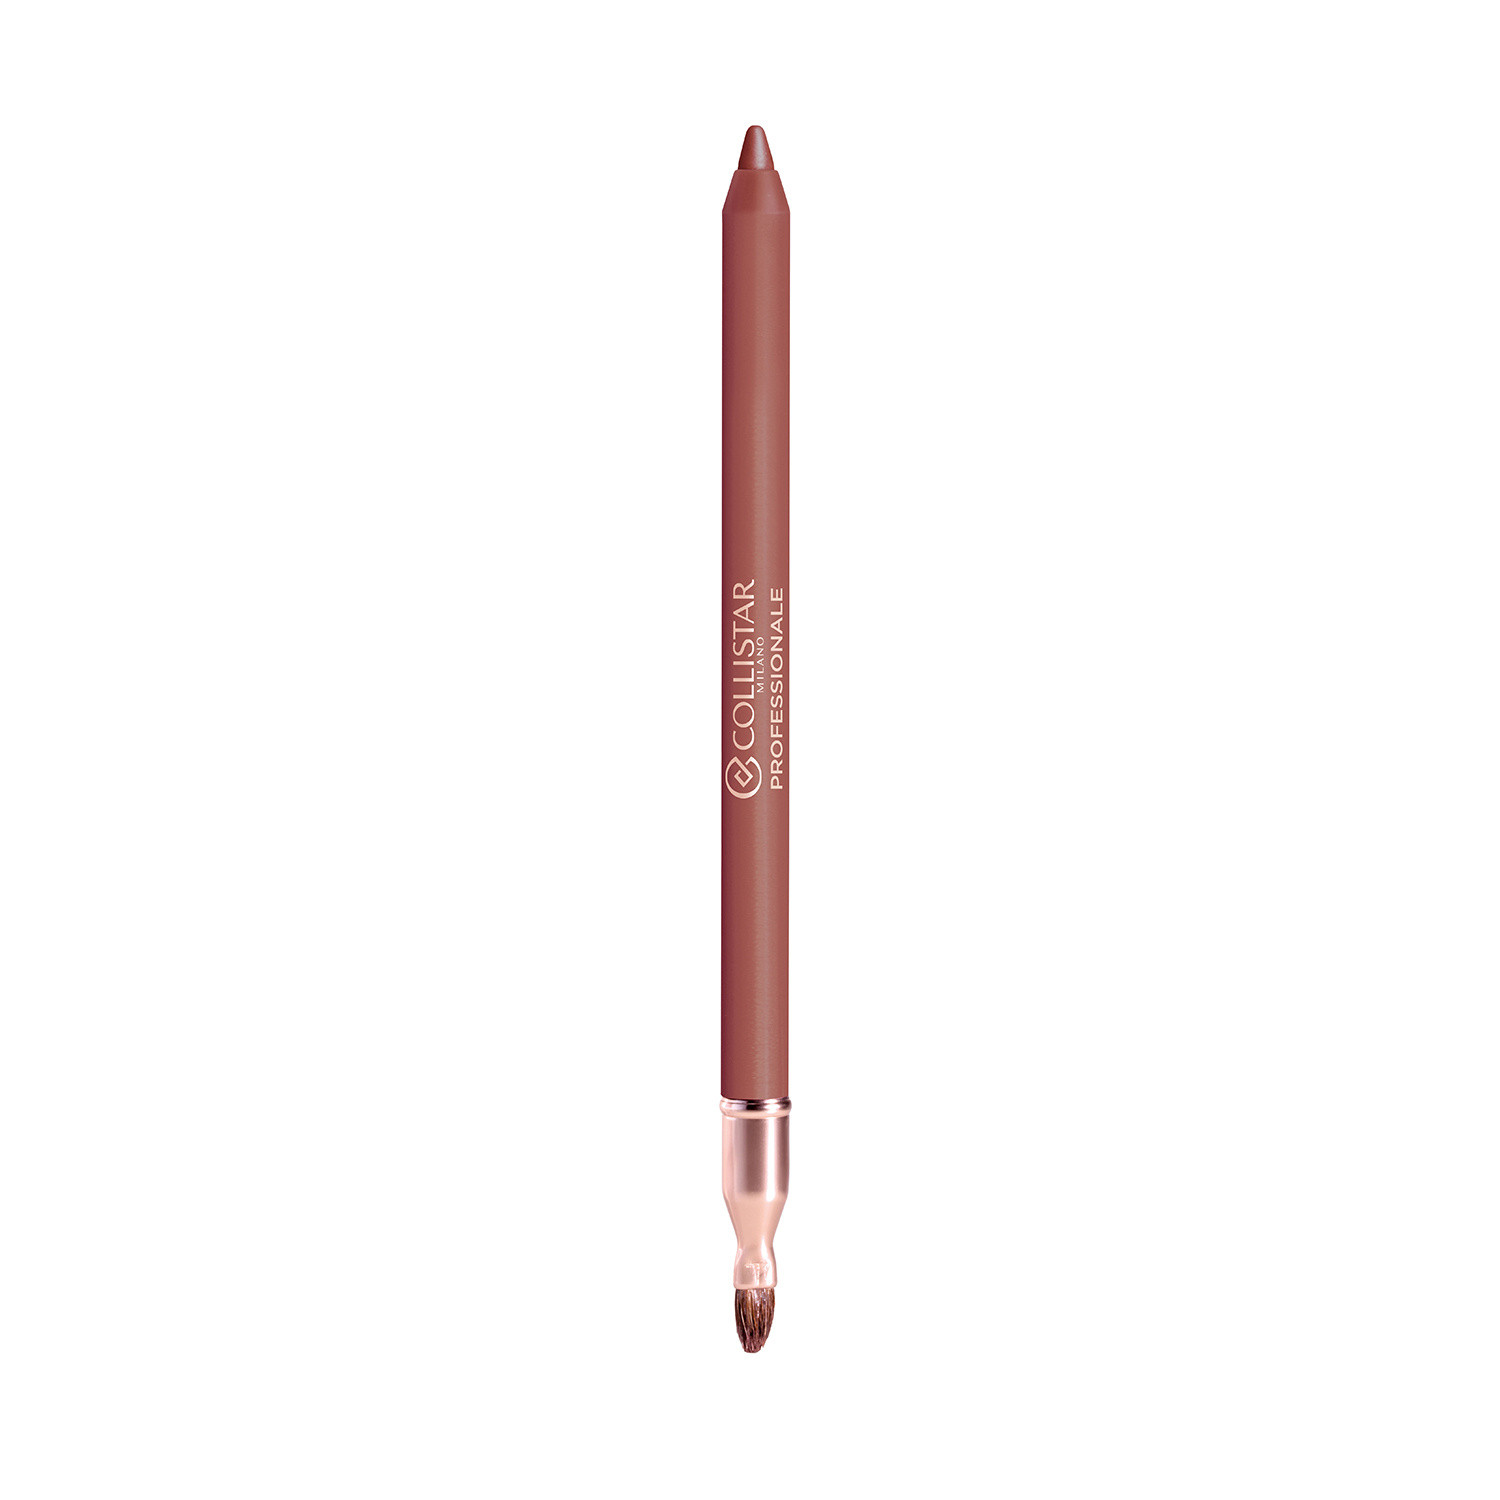 Collistar - Professionale matita labbra lunga durata - 2 Terracotta, Marrone rame, large image number 1